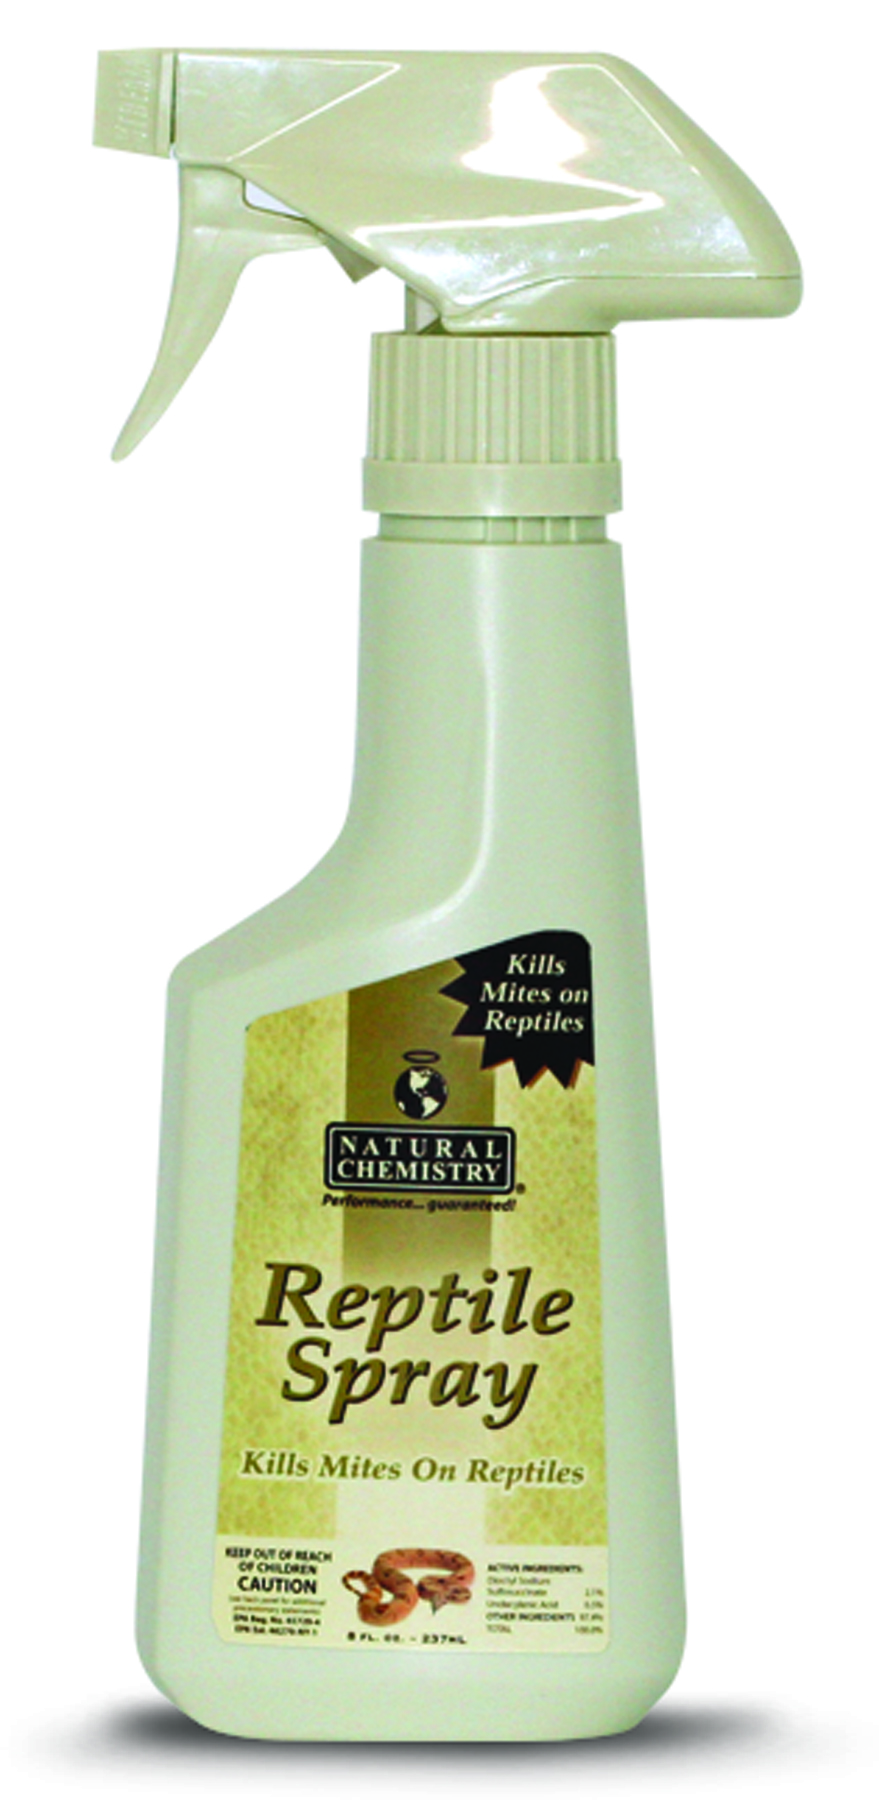 Reptile Relief For Mites - 8 Oz